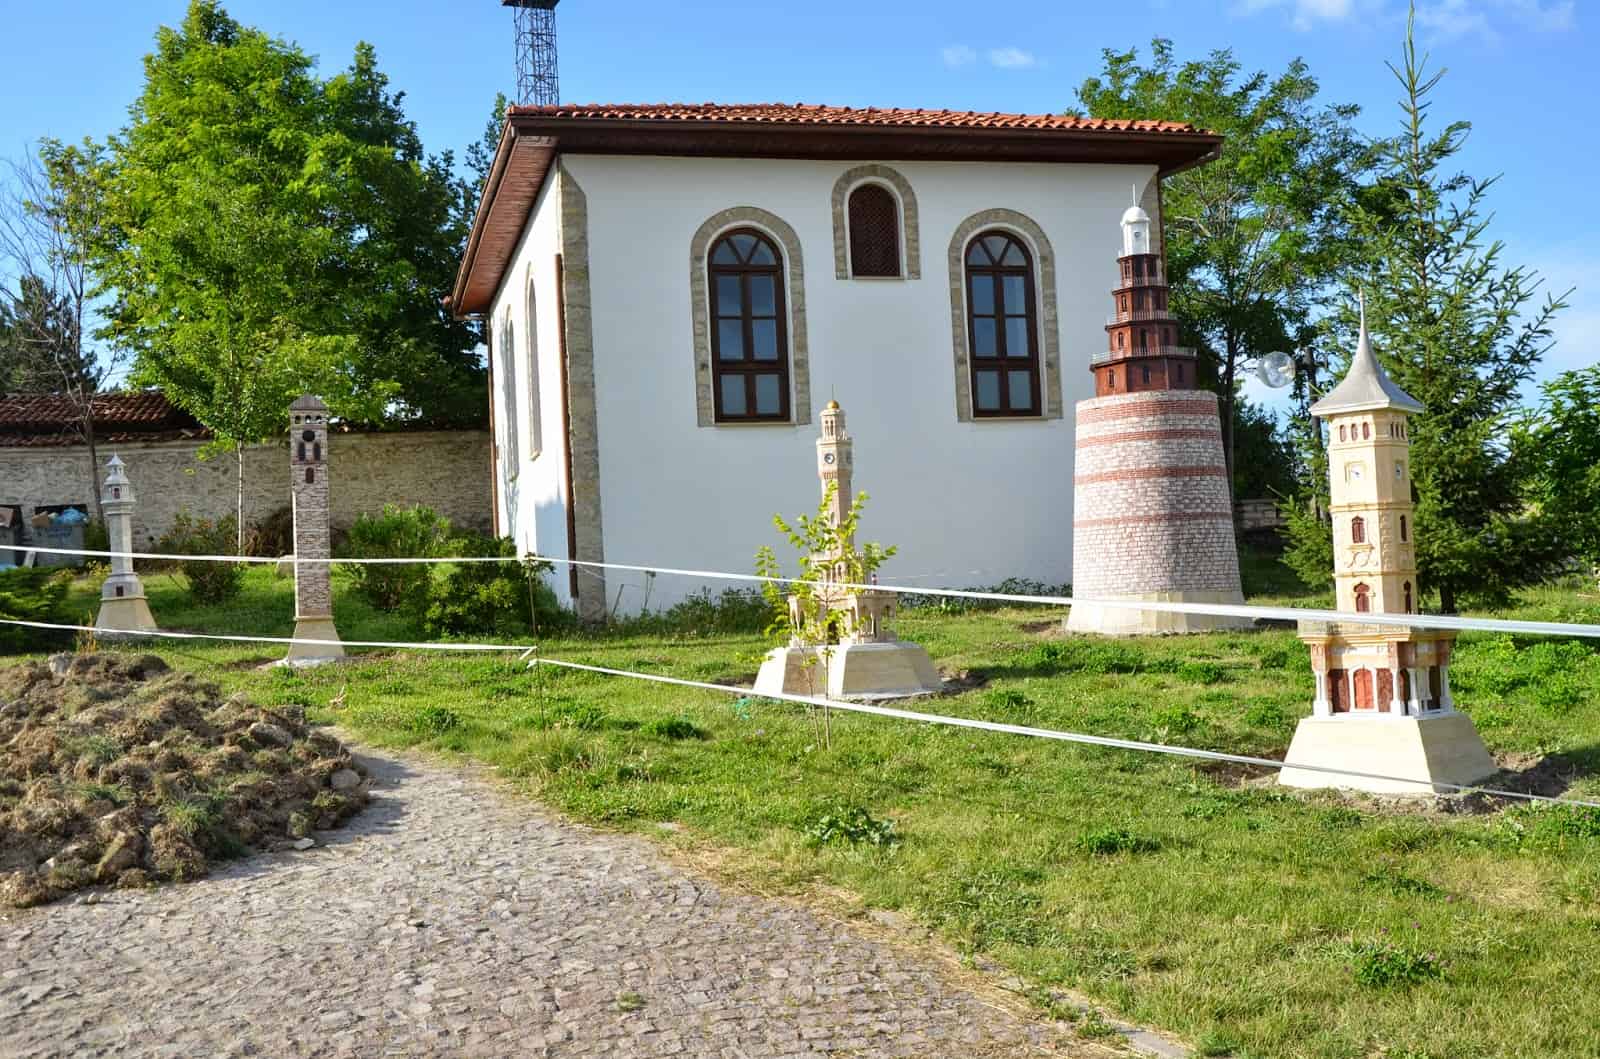 Clock tower display in Safranbolu, Turkey